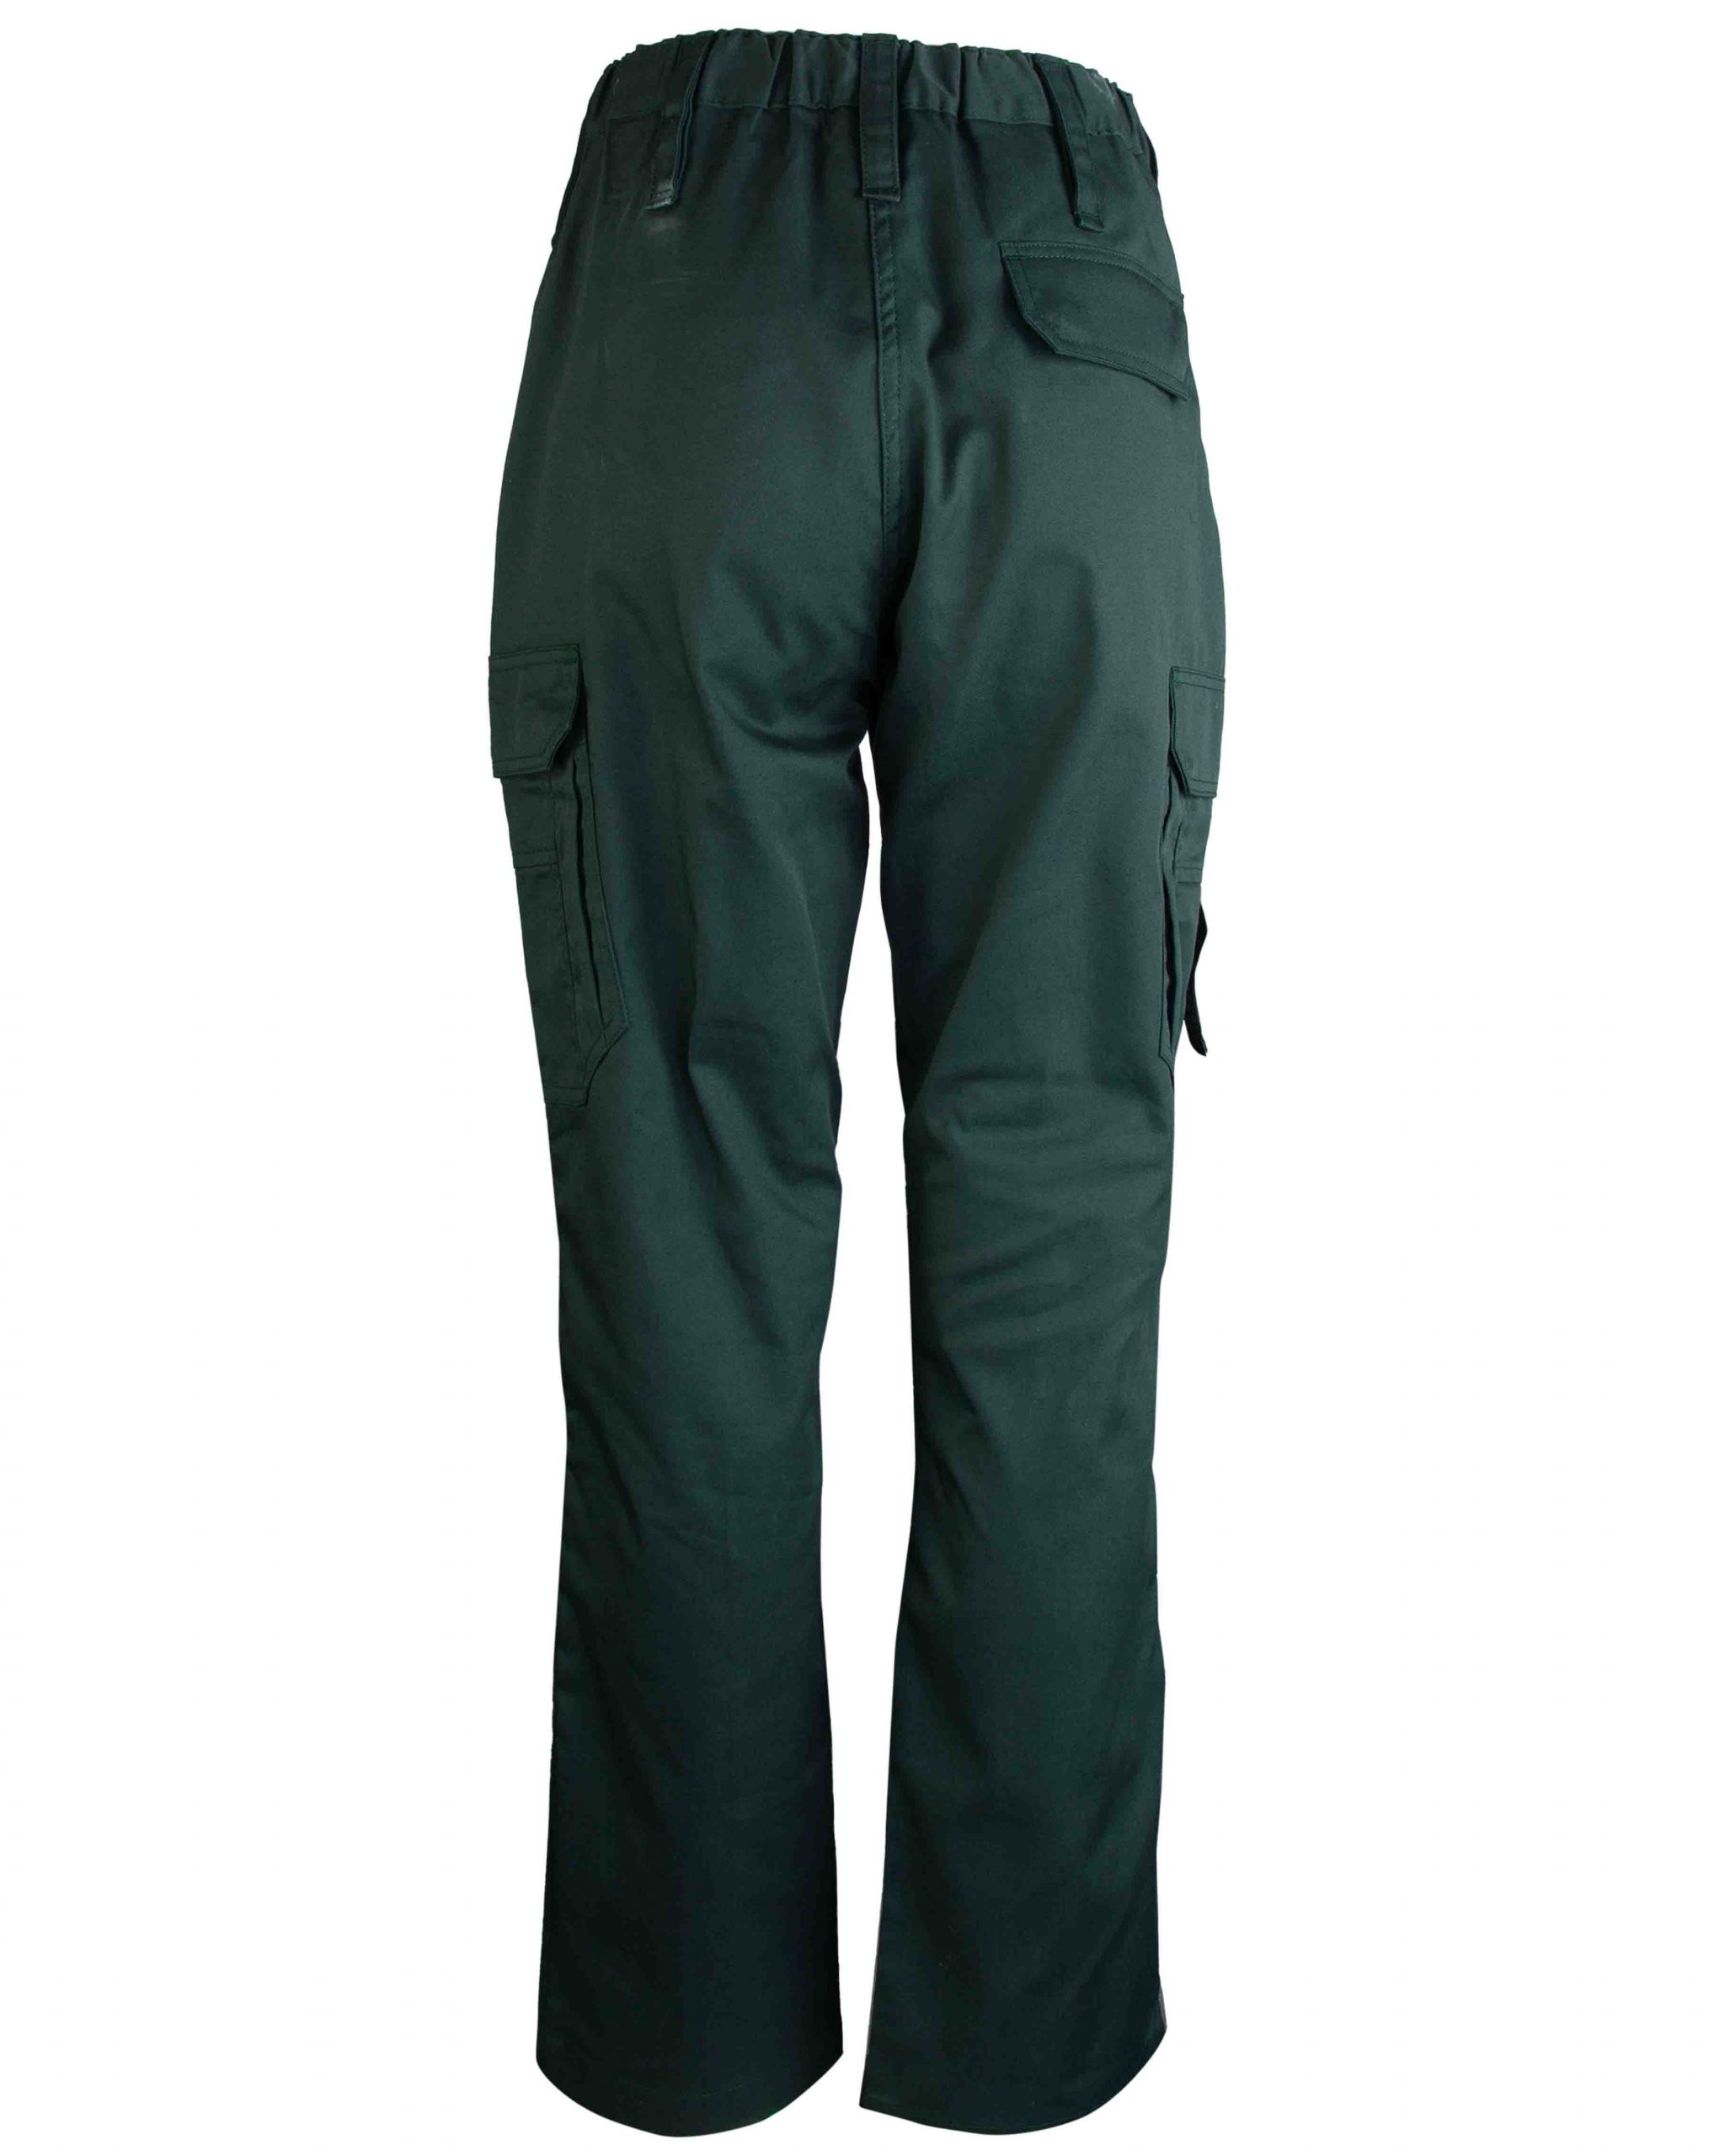 Green Ambulance Trousers – Ladies